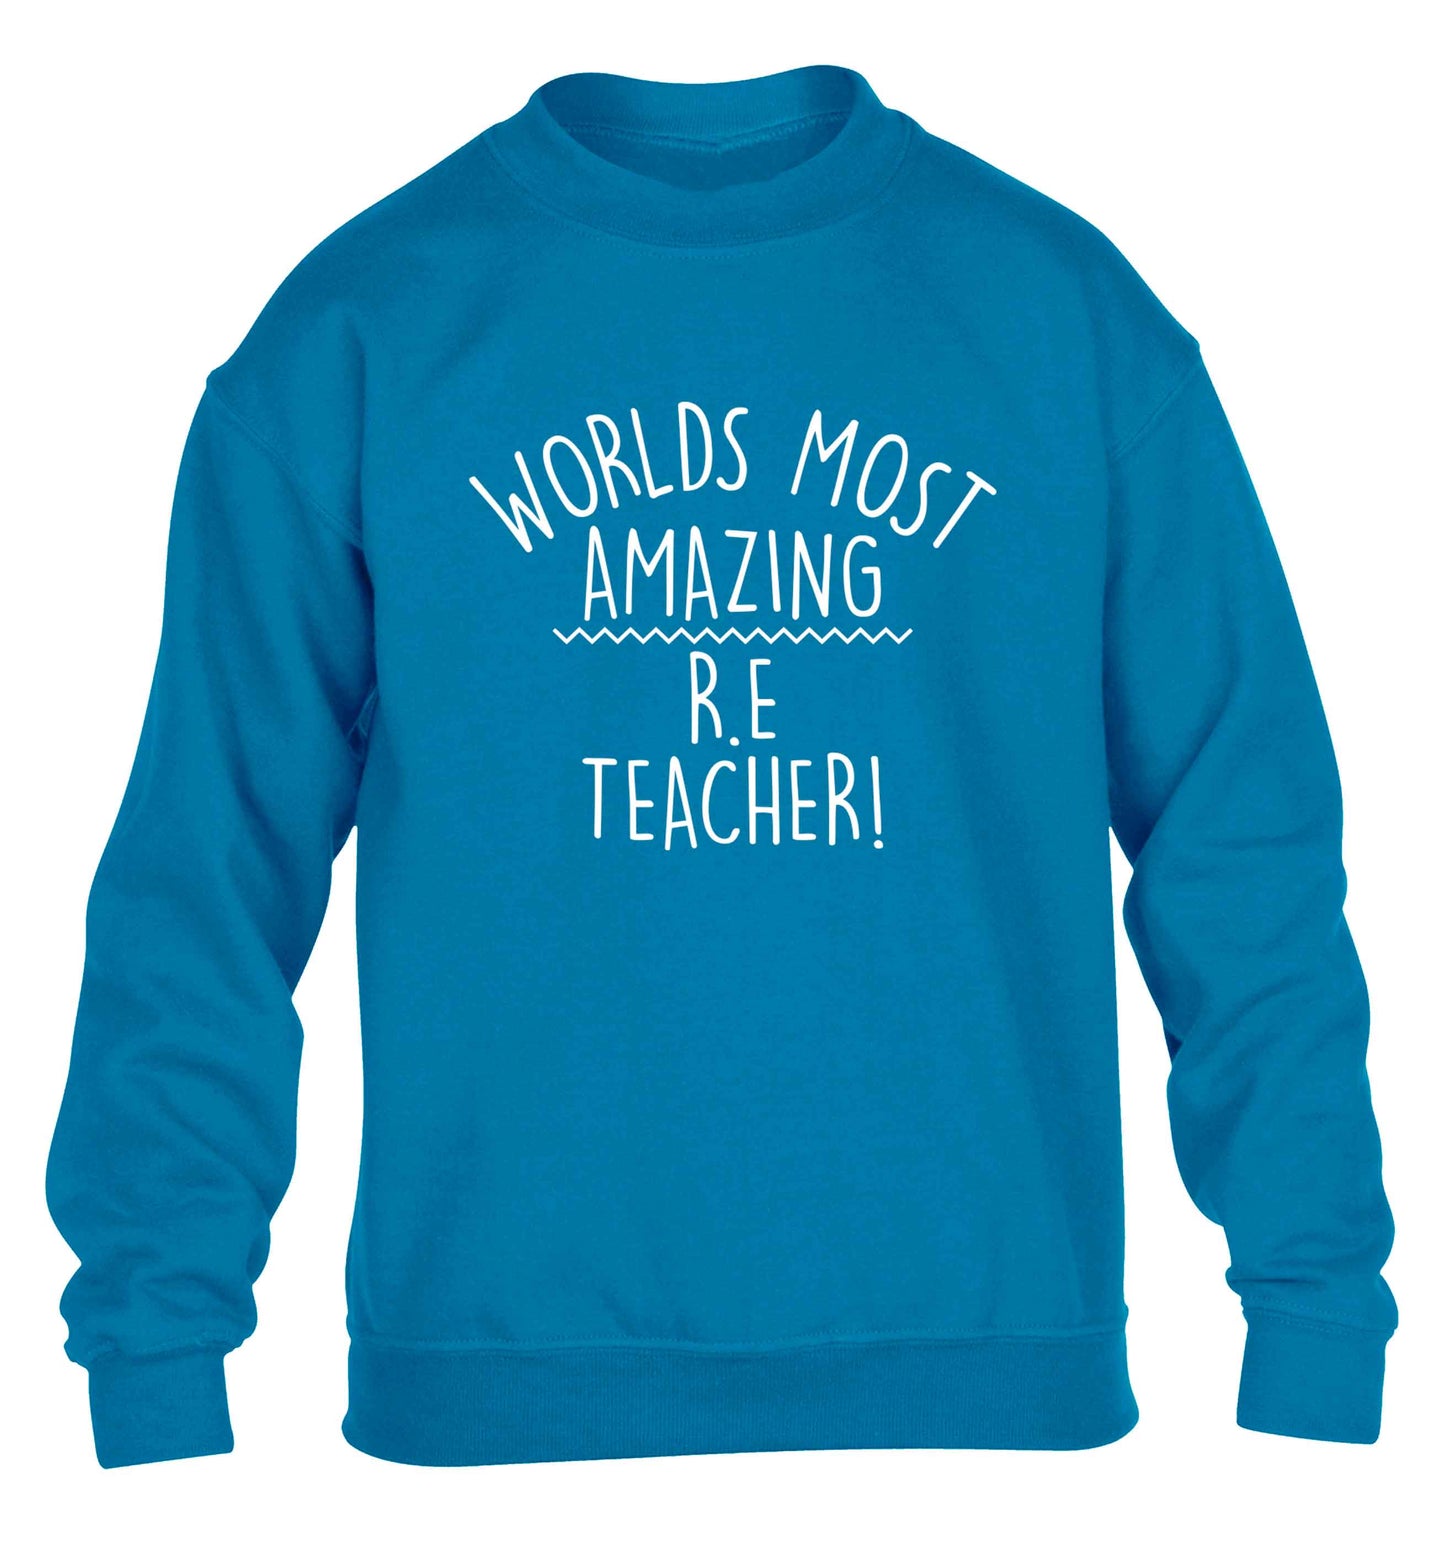 Worlds most amazing R.E teacher children's blue sweater 12-13 Years